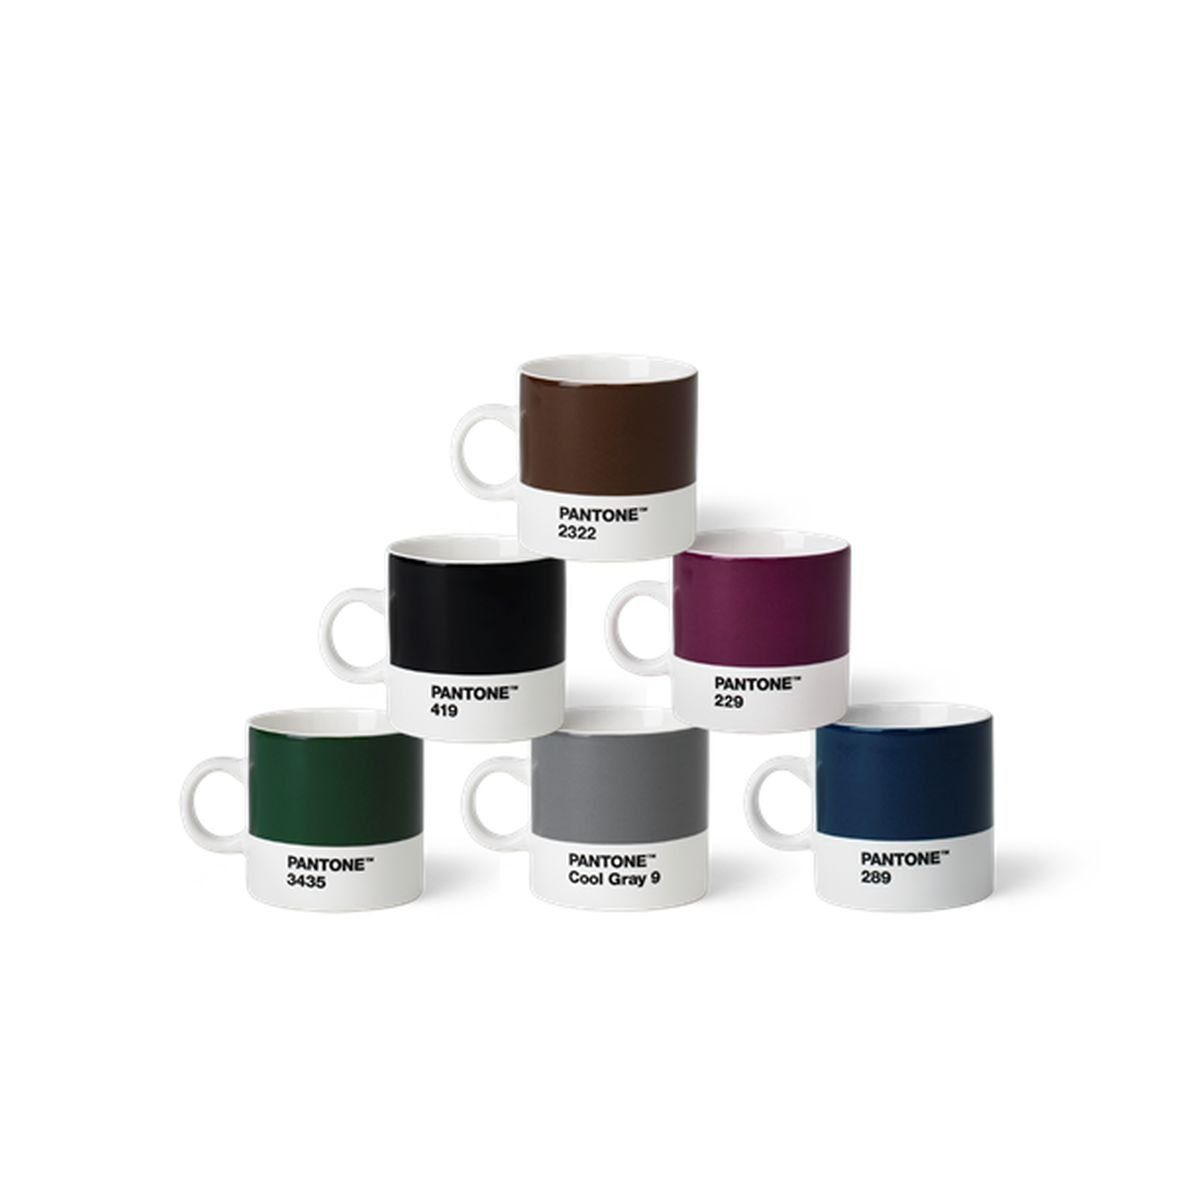 Pantone Universe Espressotasse Set Natur-Farben, Porzellan, 6-teilig | Kaffeeservice